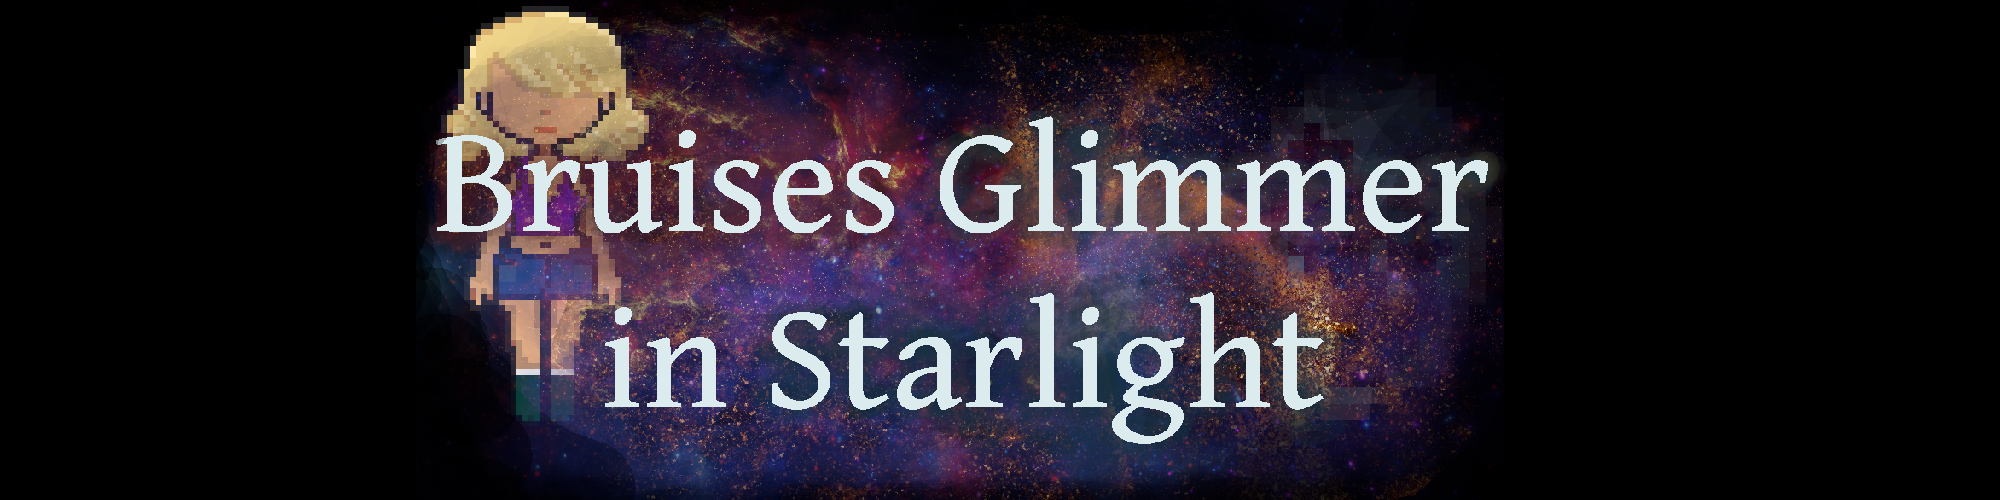 Bruises Glimmer in Starlight